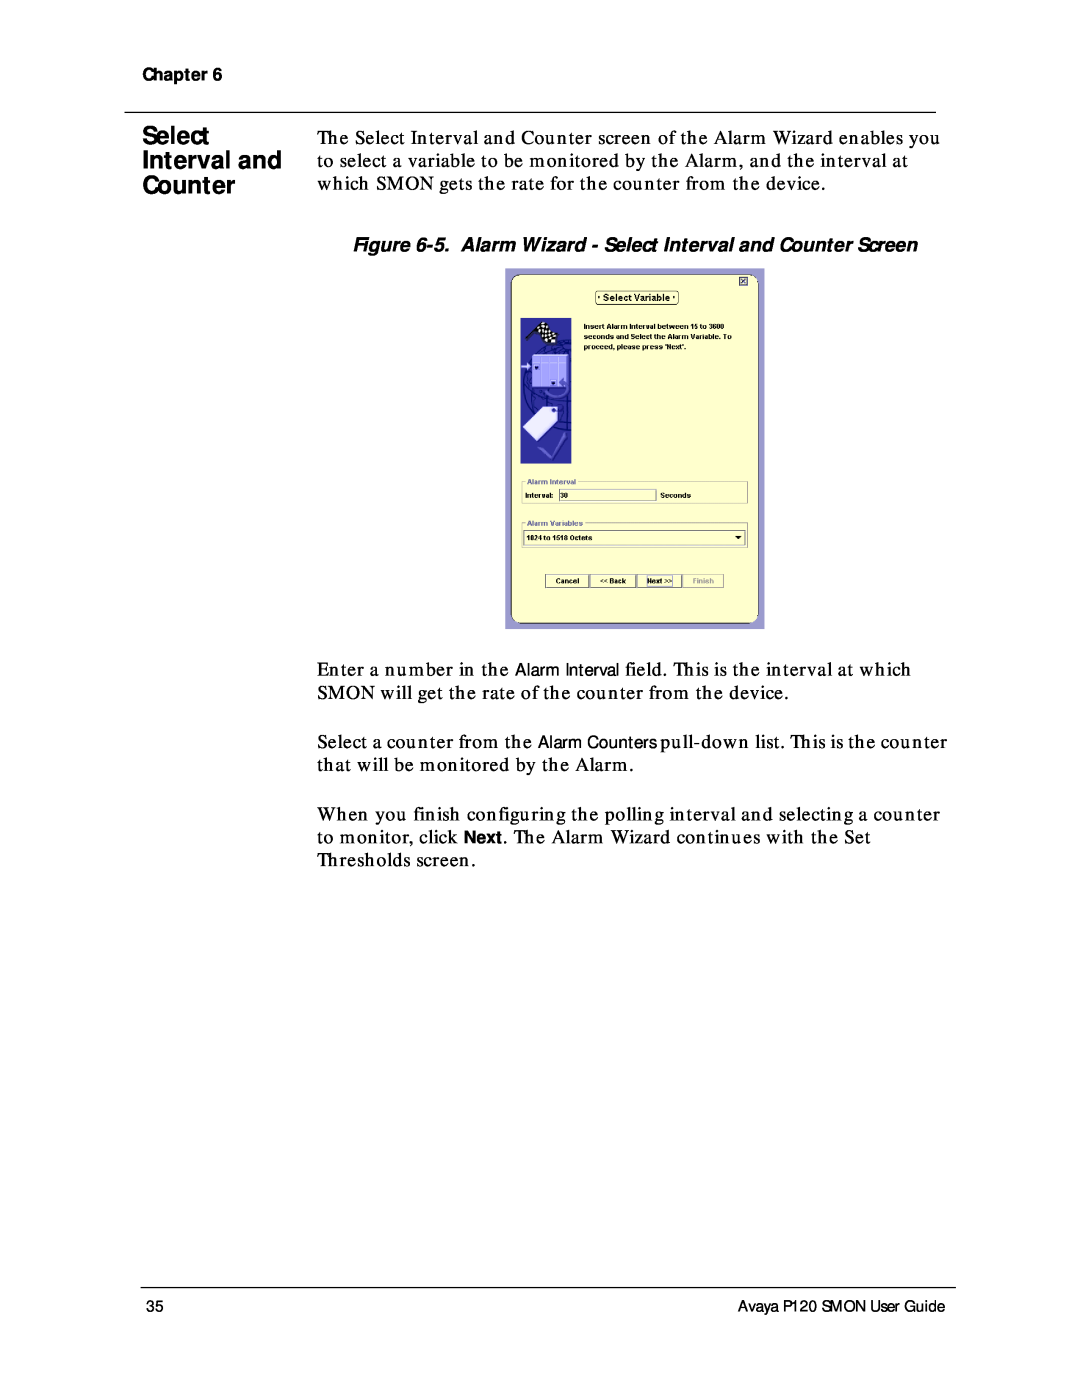 Avaya P120 SMON manual 5. Alarm Wizard - Select Interval and Counter Screen 